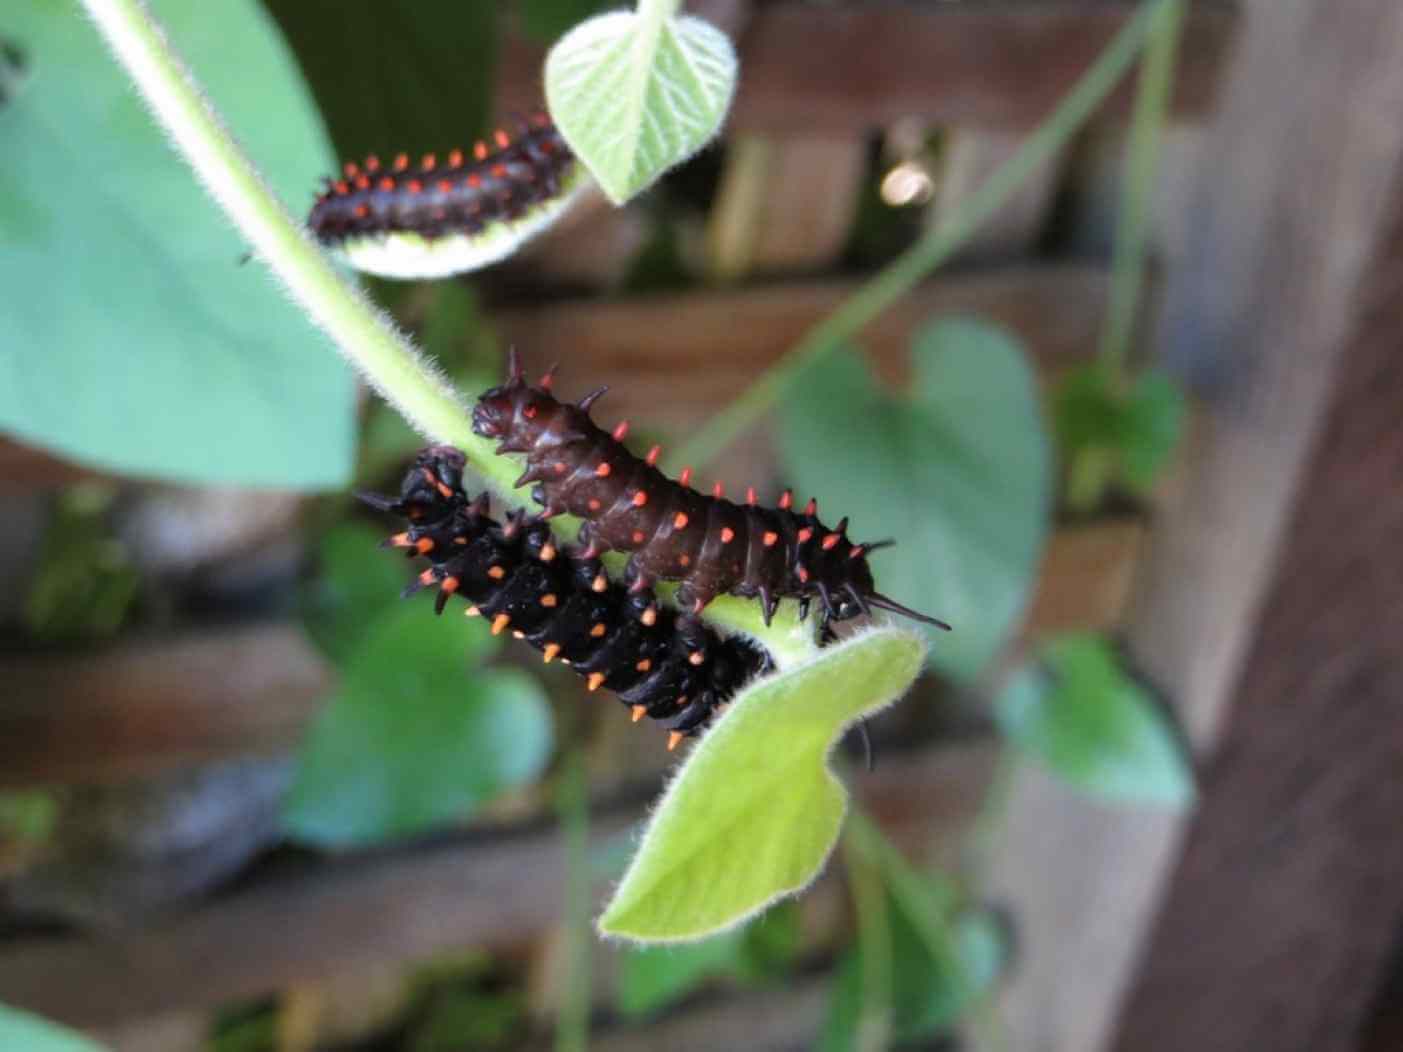 Home Ground Habitats - Caterpillars on vines